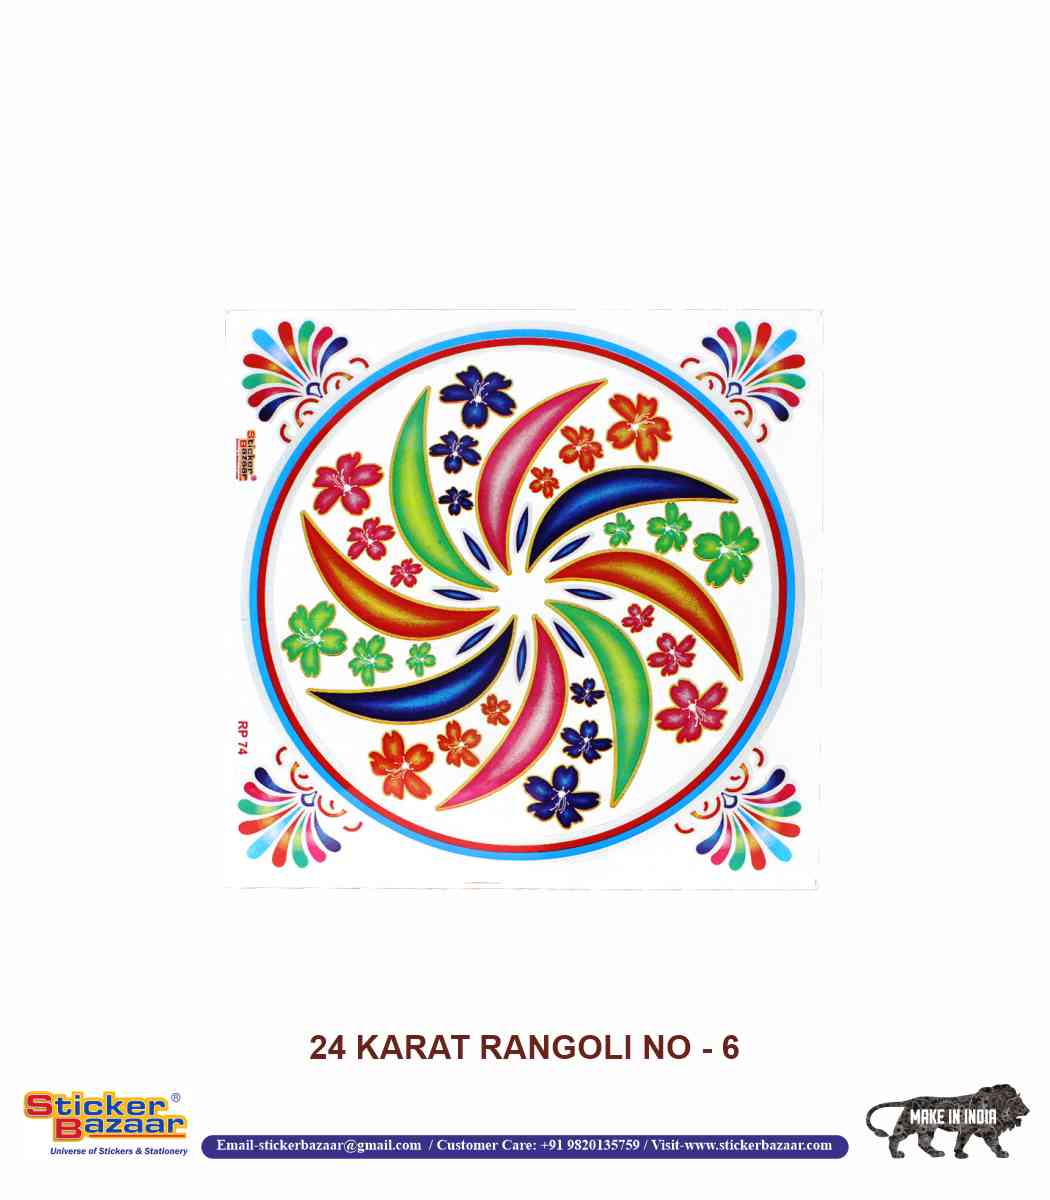 Sticker Bazaar 24 Karat Rangoli KR6